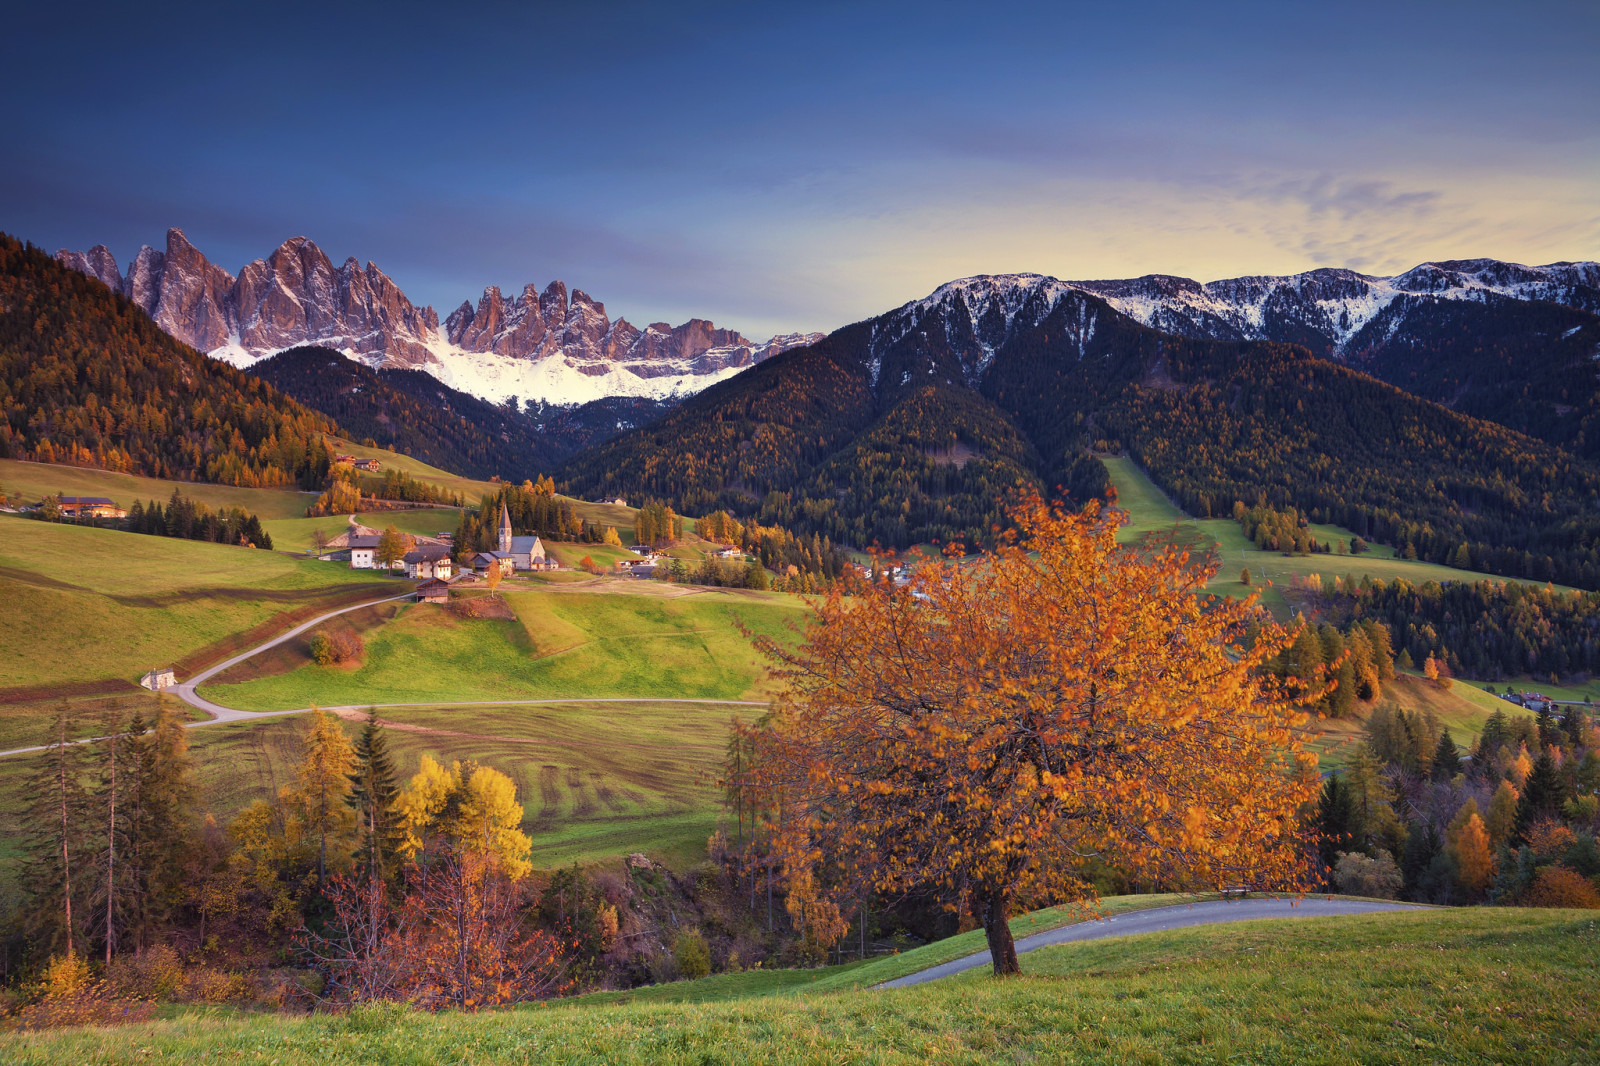 salju, musim gugur, pohon, gunung, rumah, Italia, pegunungan Alpen